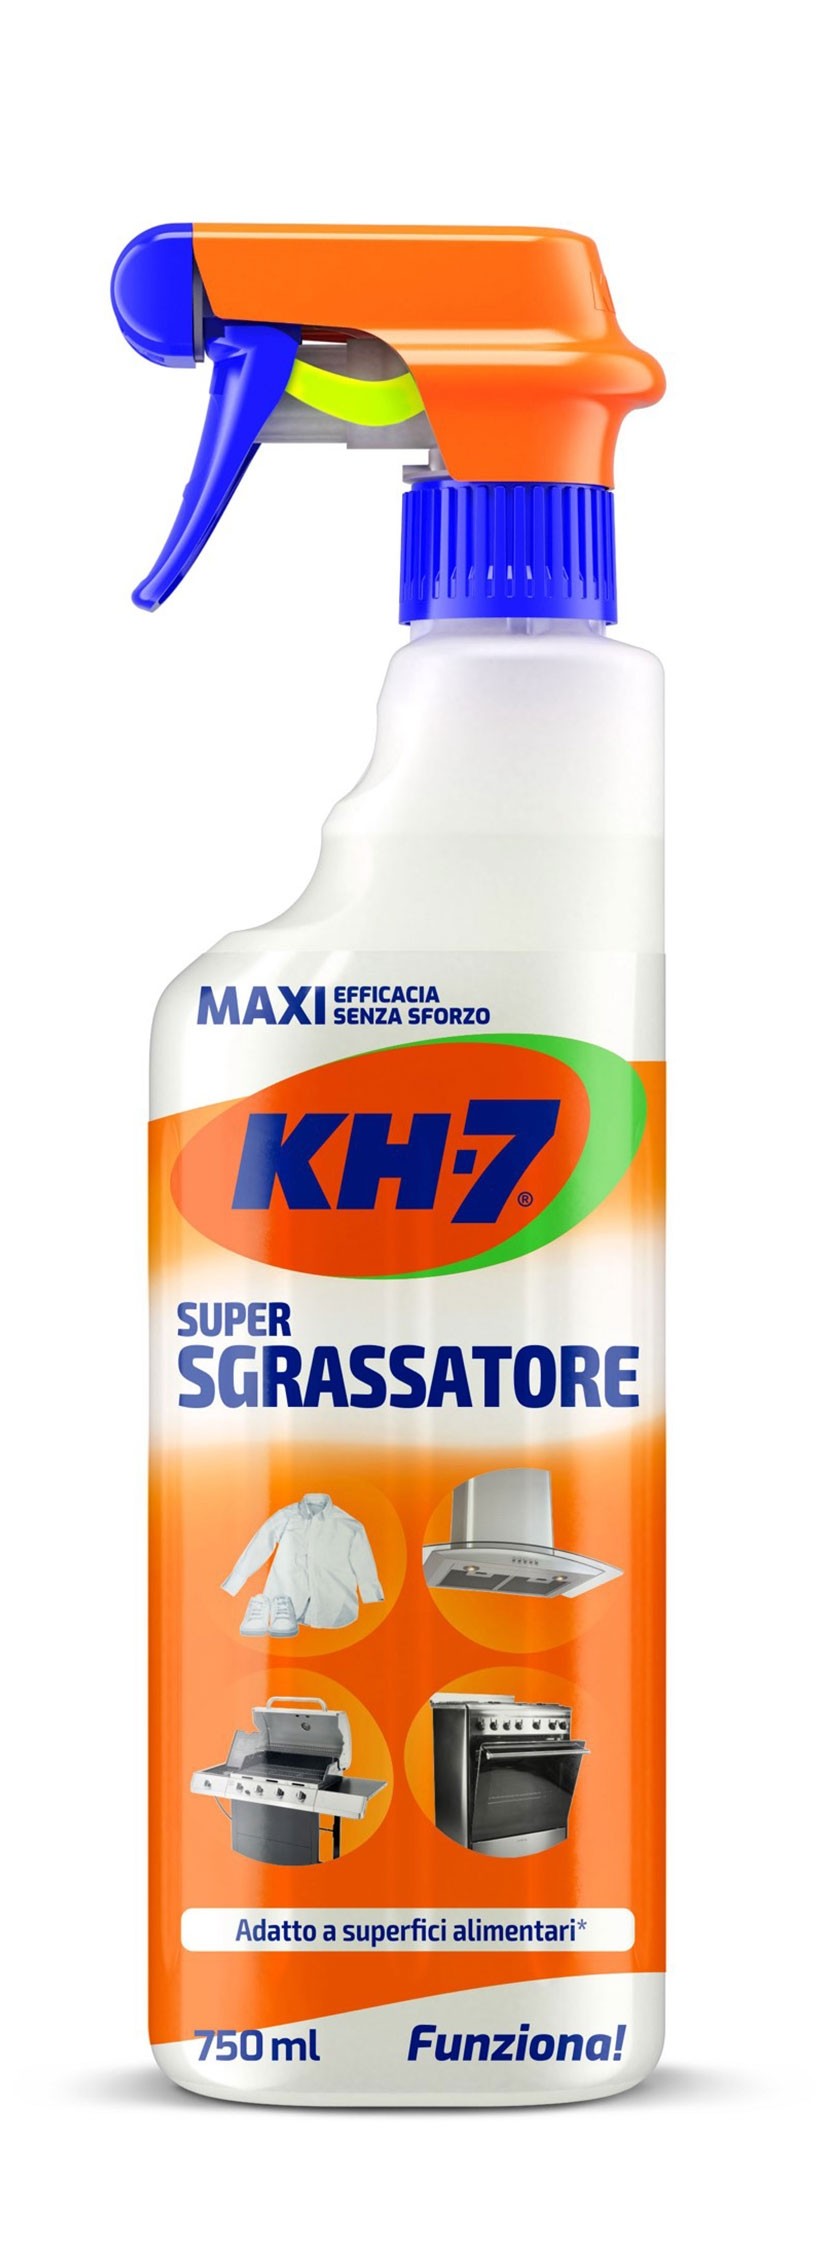 Kh7 Sgrassatore